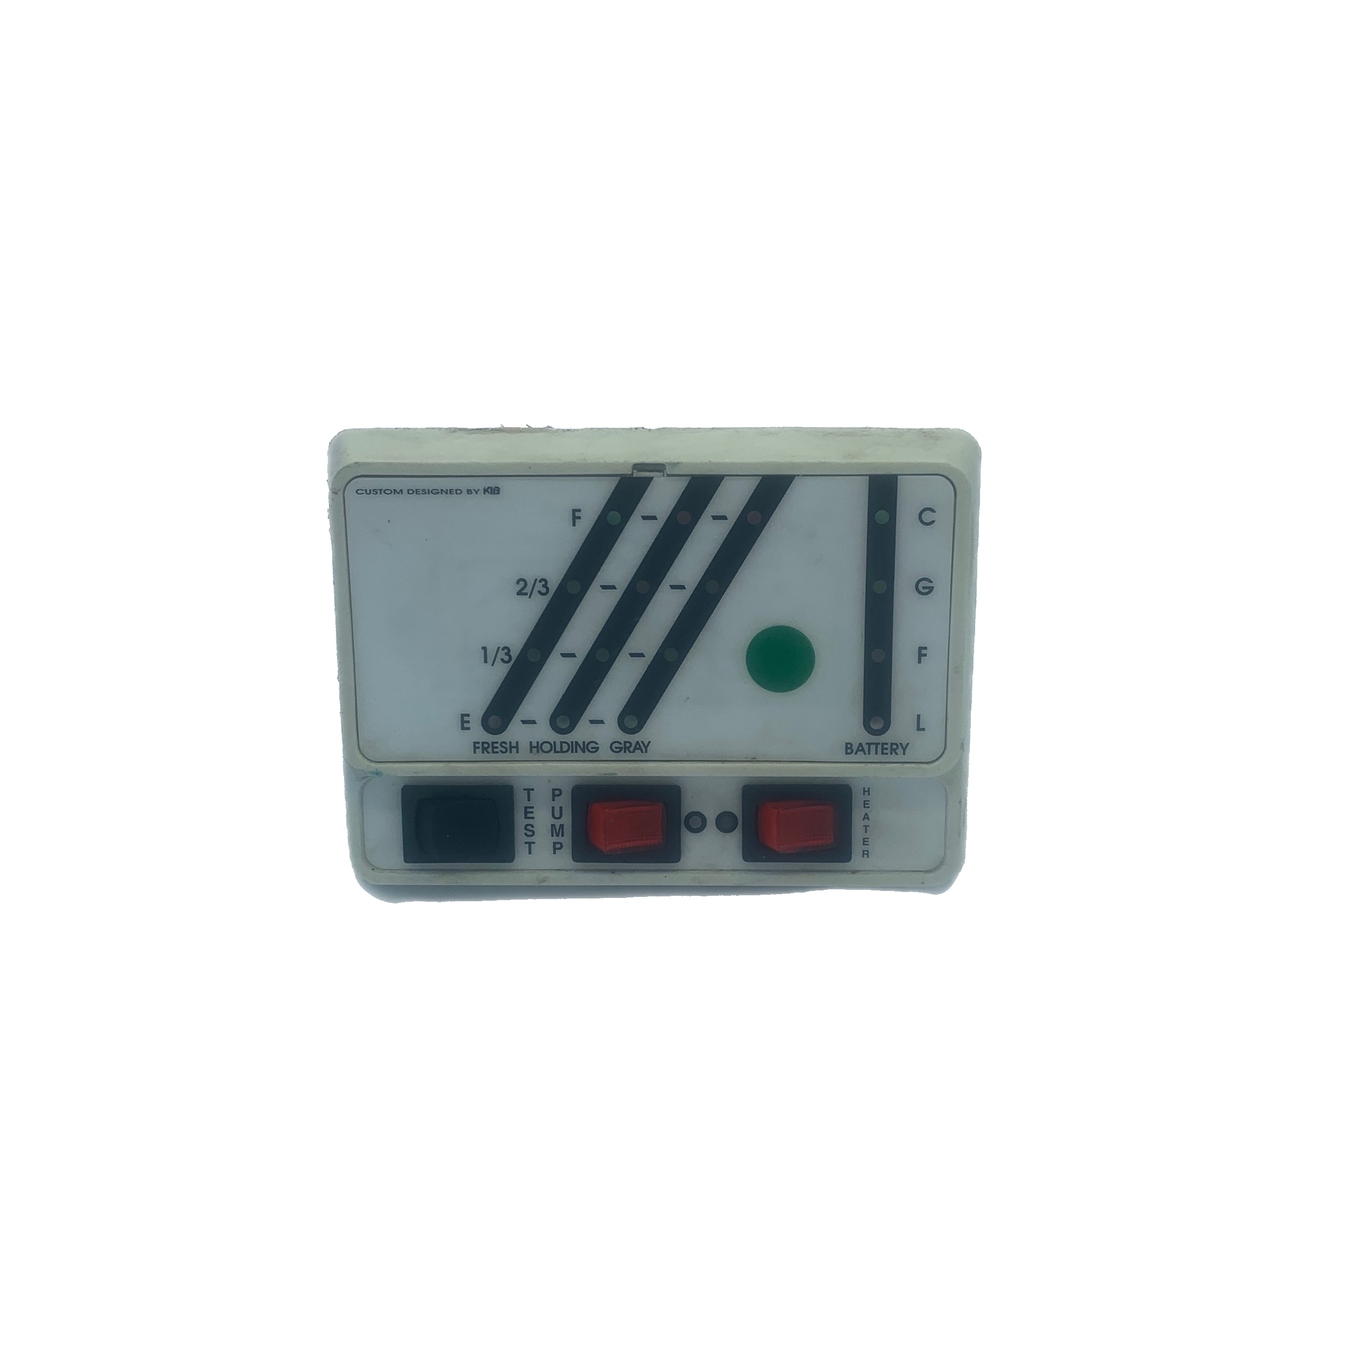 Used RV Tank Monitors